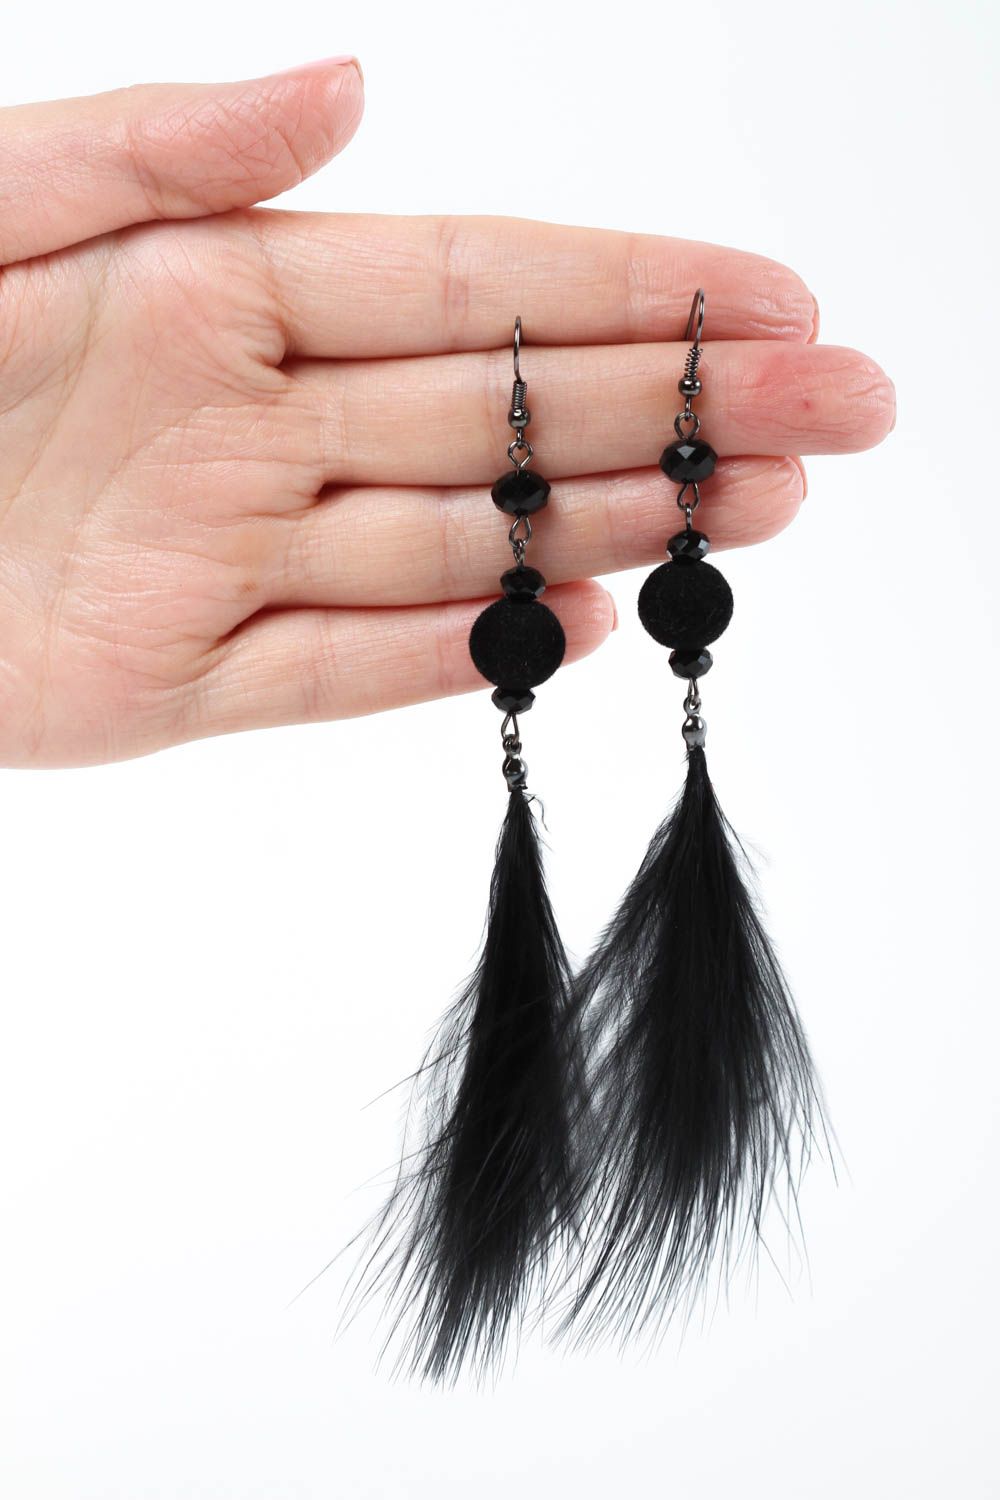 Handmade earrings designer accessories unusual jewelry feathers earrings photo 5